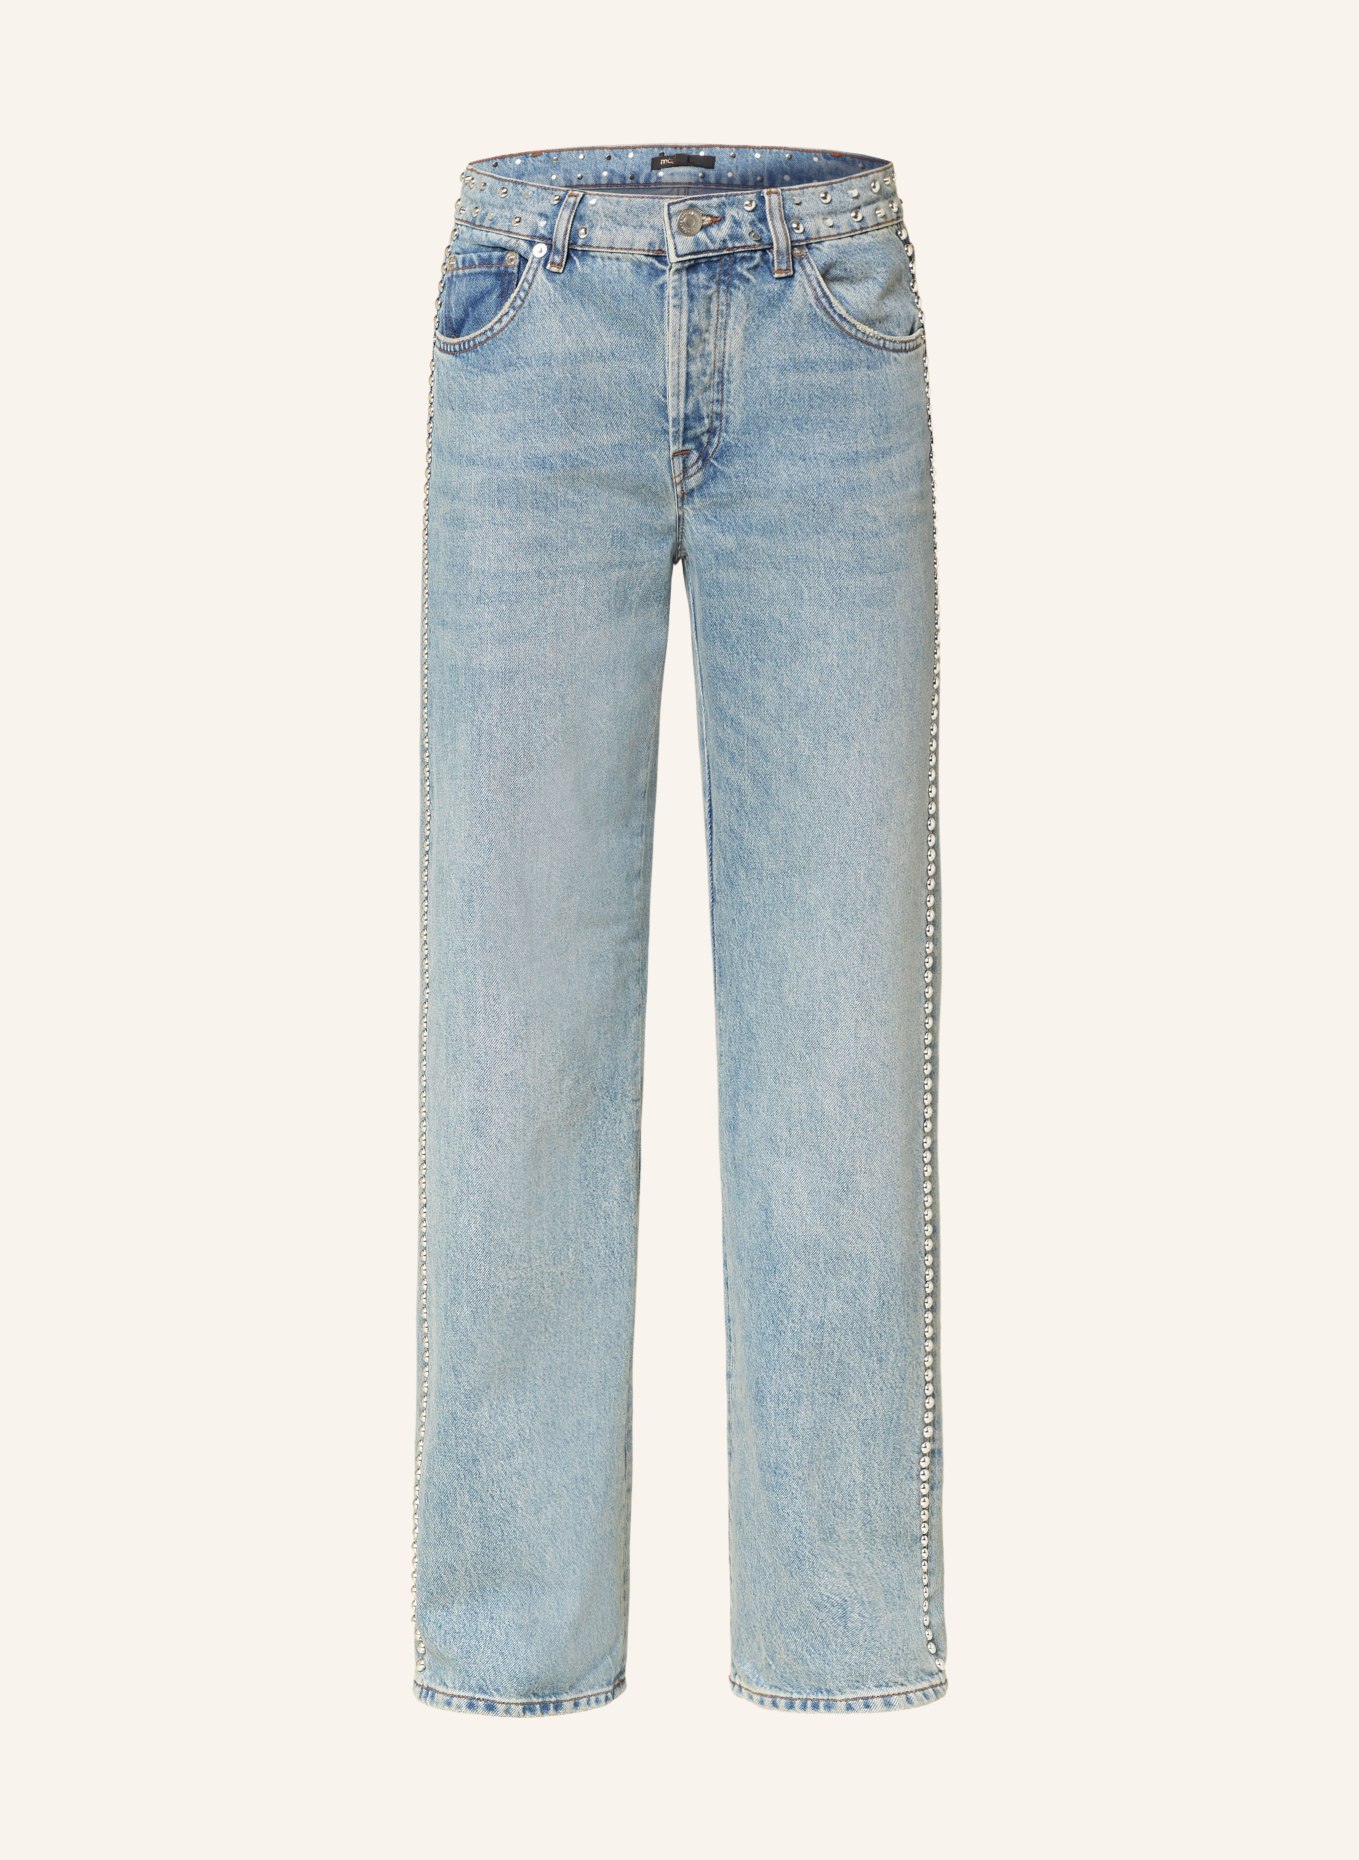 maje Straight Jeans mit Nieten, Farbe: 0201 BLUE (Bild 1)